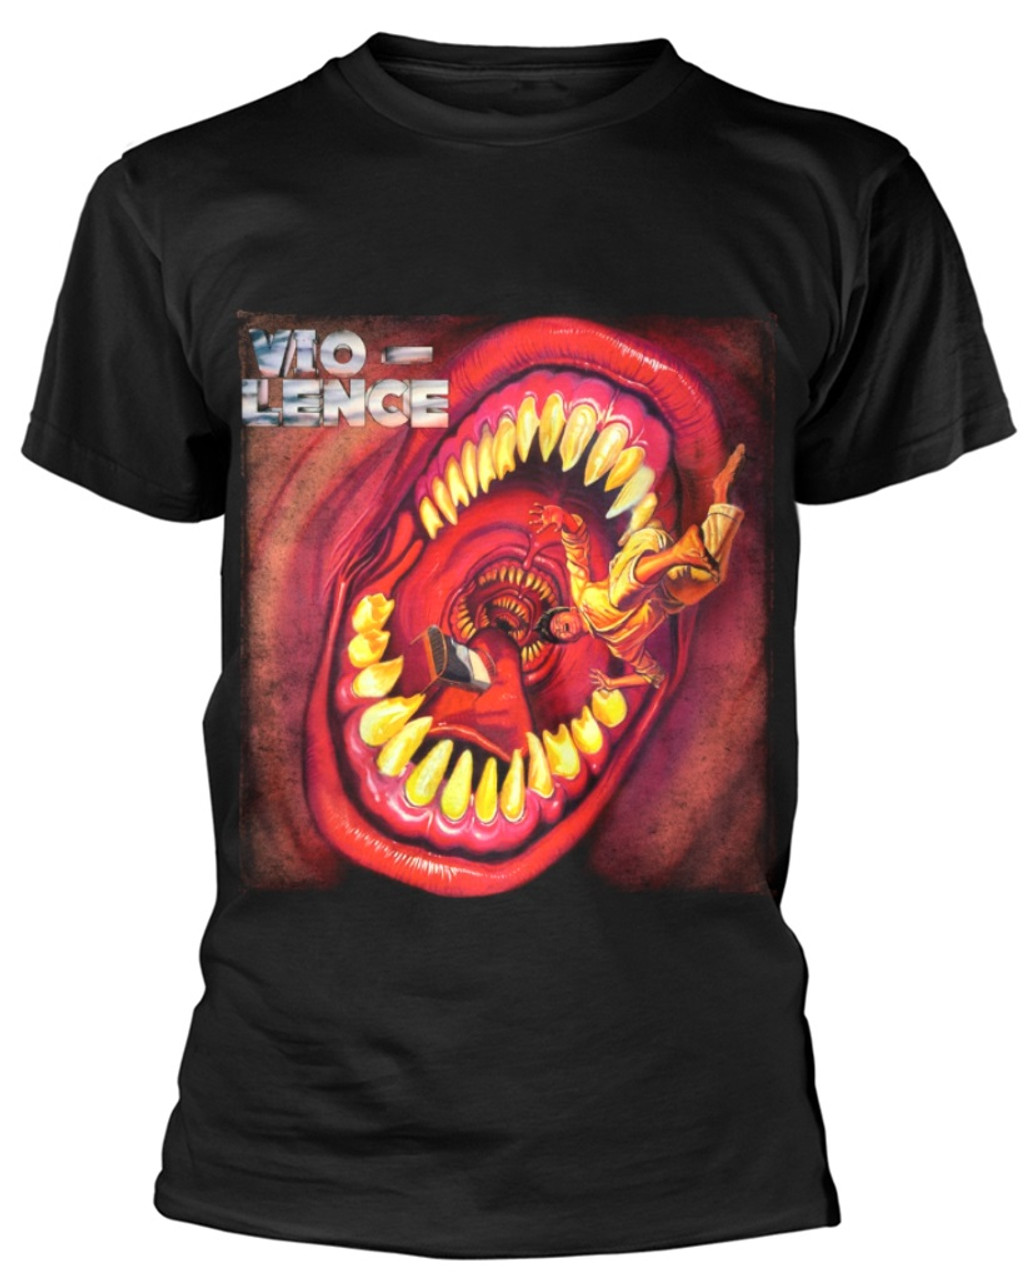 Vio-lence 'Eternal Nightmare' T-Shirt